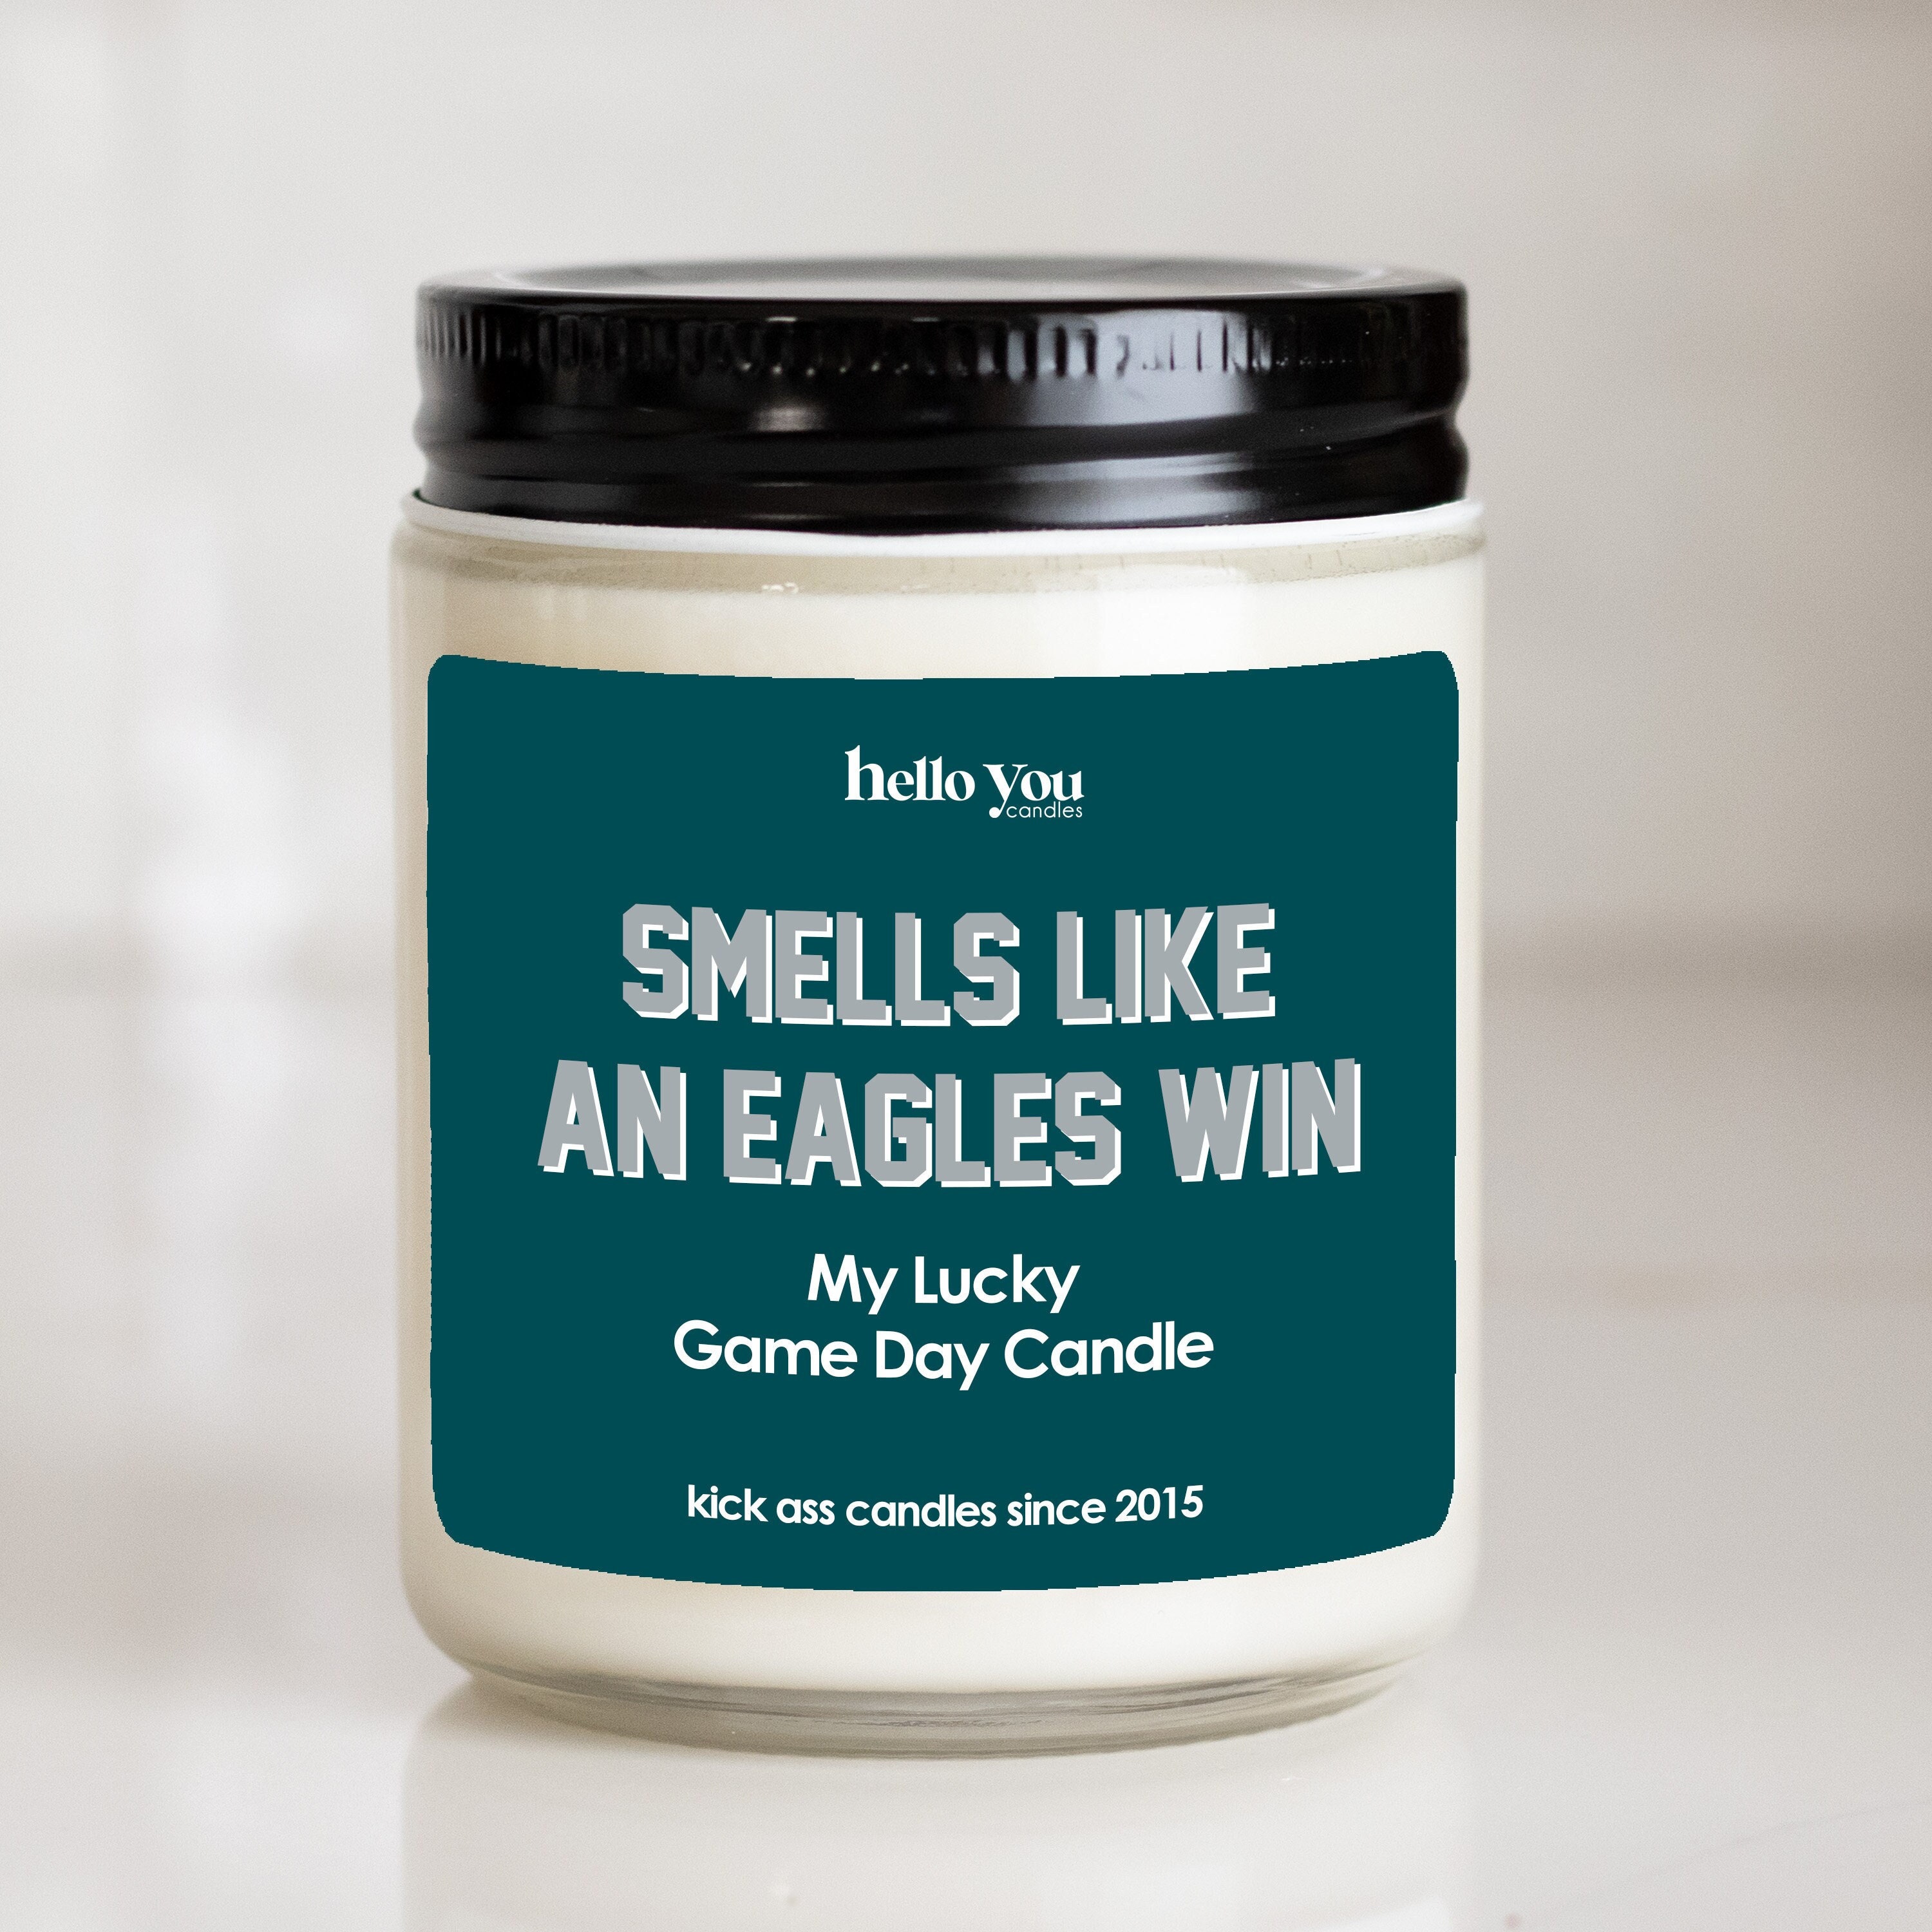 Ponderosa Pine Wax Melts (4) in Philadelphia Eagles